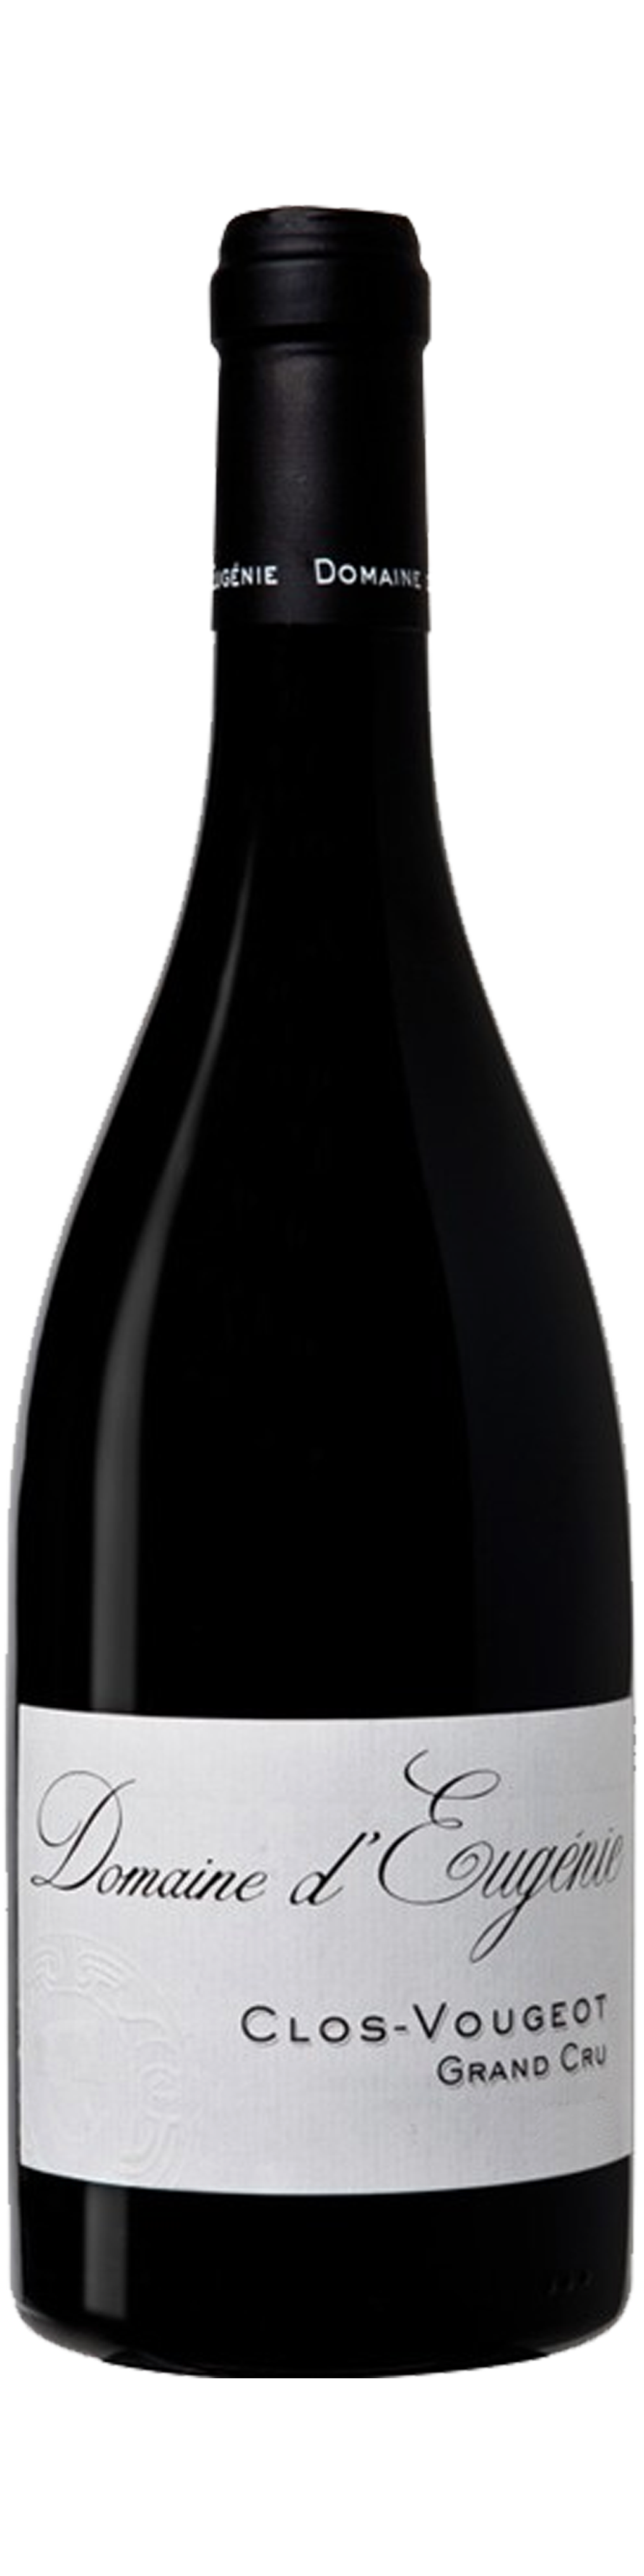 Bottle shot of 2008 Clos de Vougeot Grand Cru